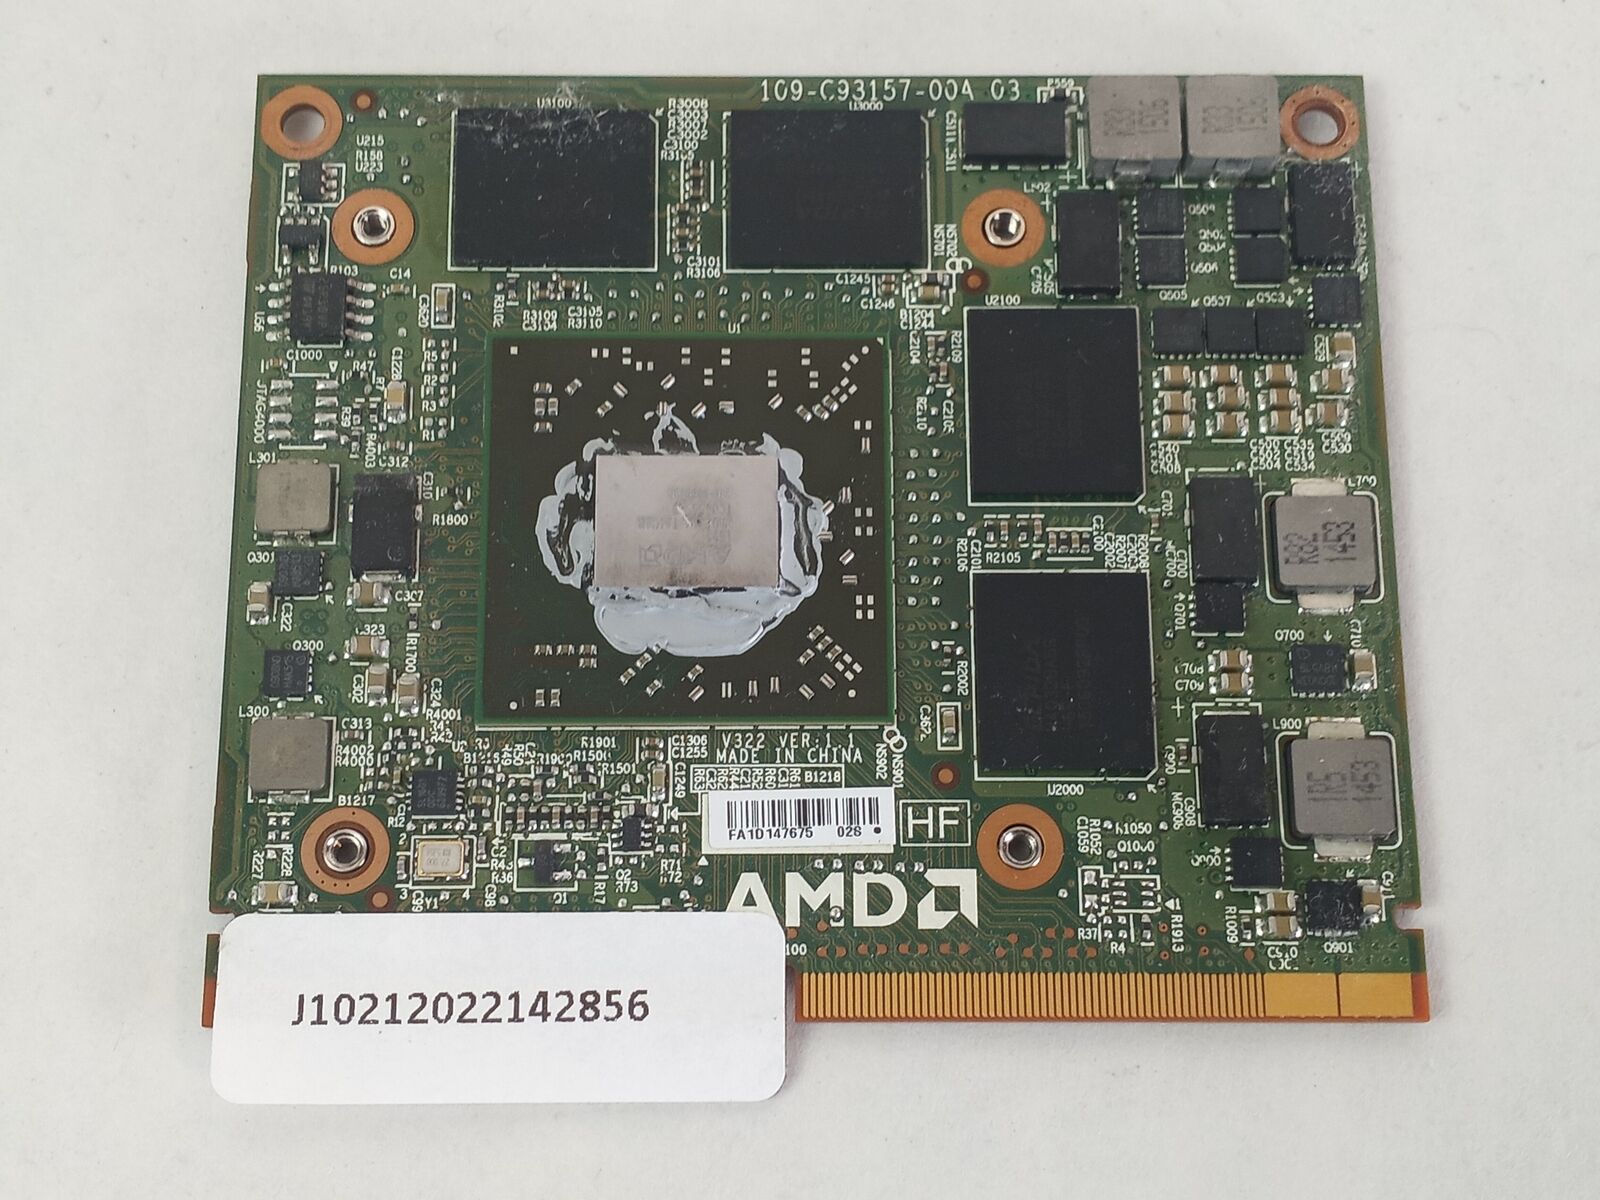 Lot of 5 AMD FirePro W5170M 2 GB GDDR5 MXM 3.0 A Laptop Video Card